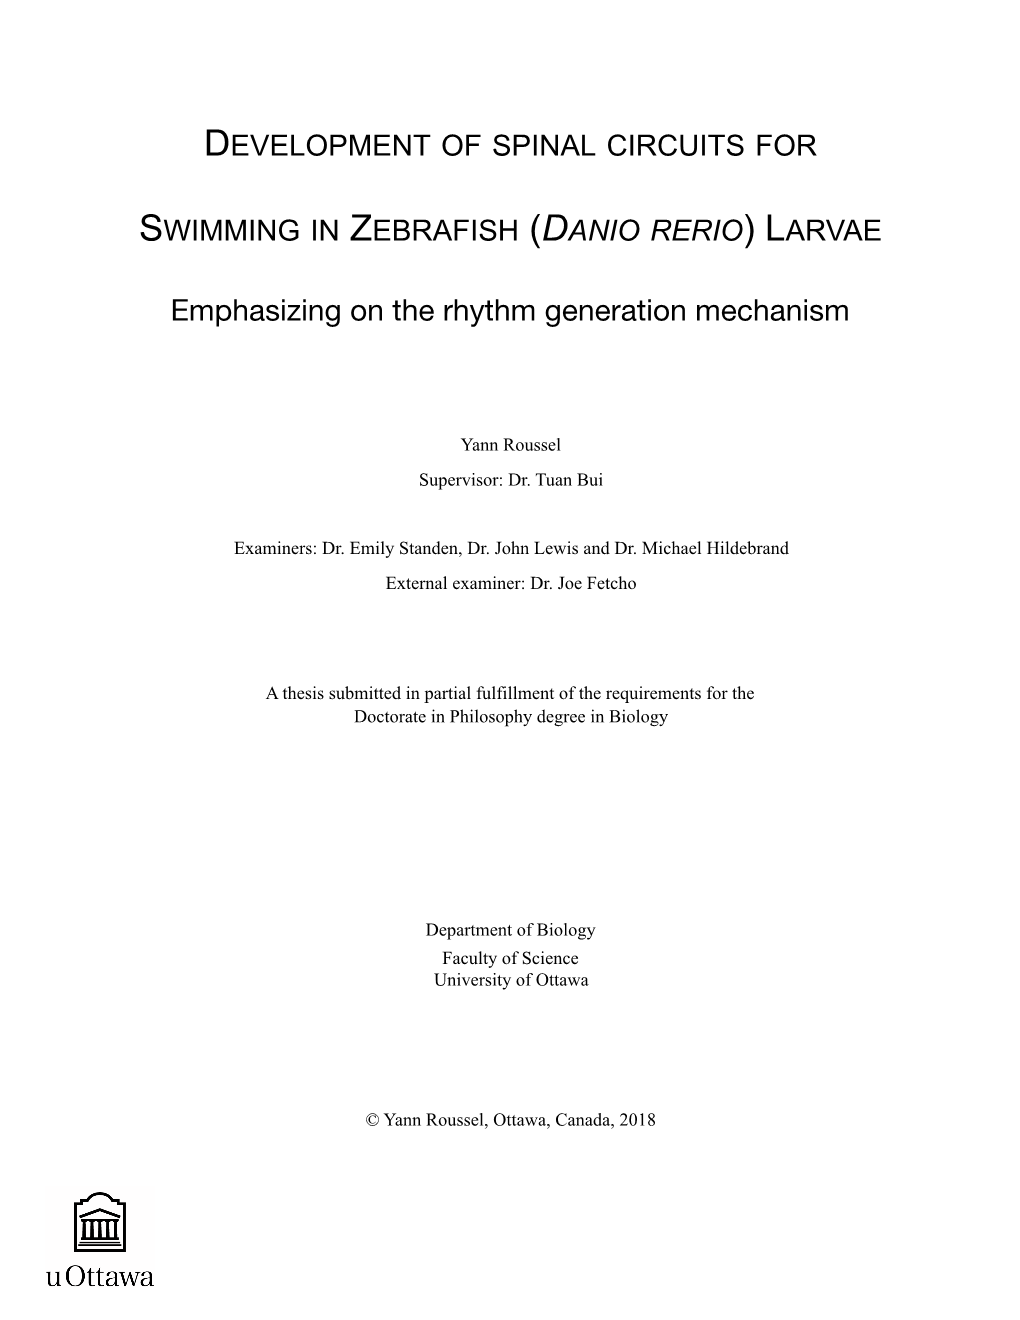 Emphasizing on the Rhythm Generation Mechanism